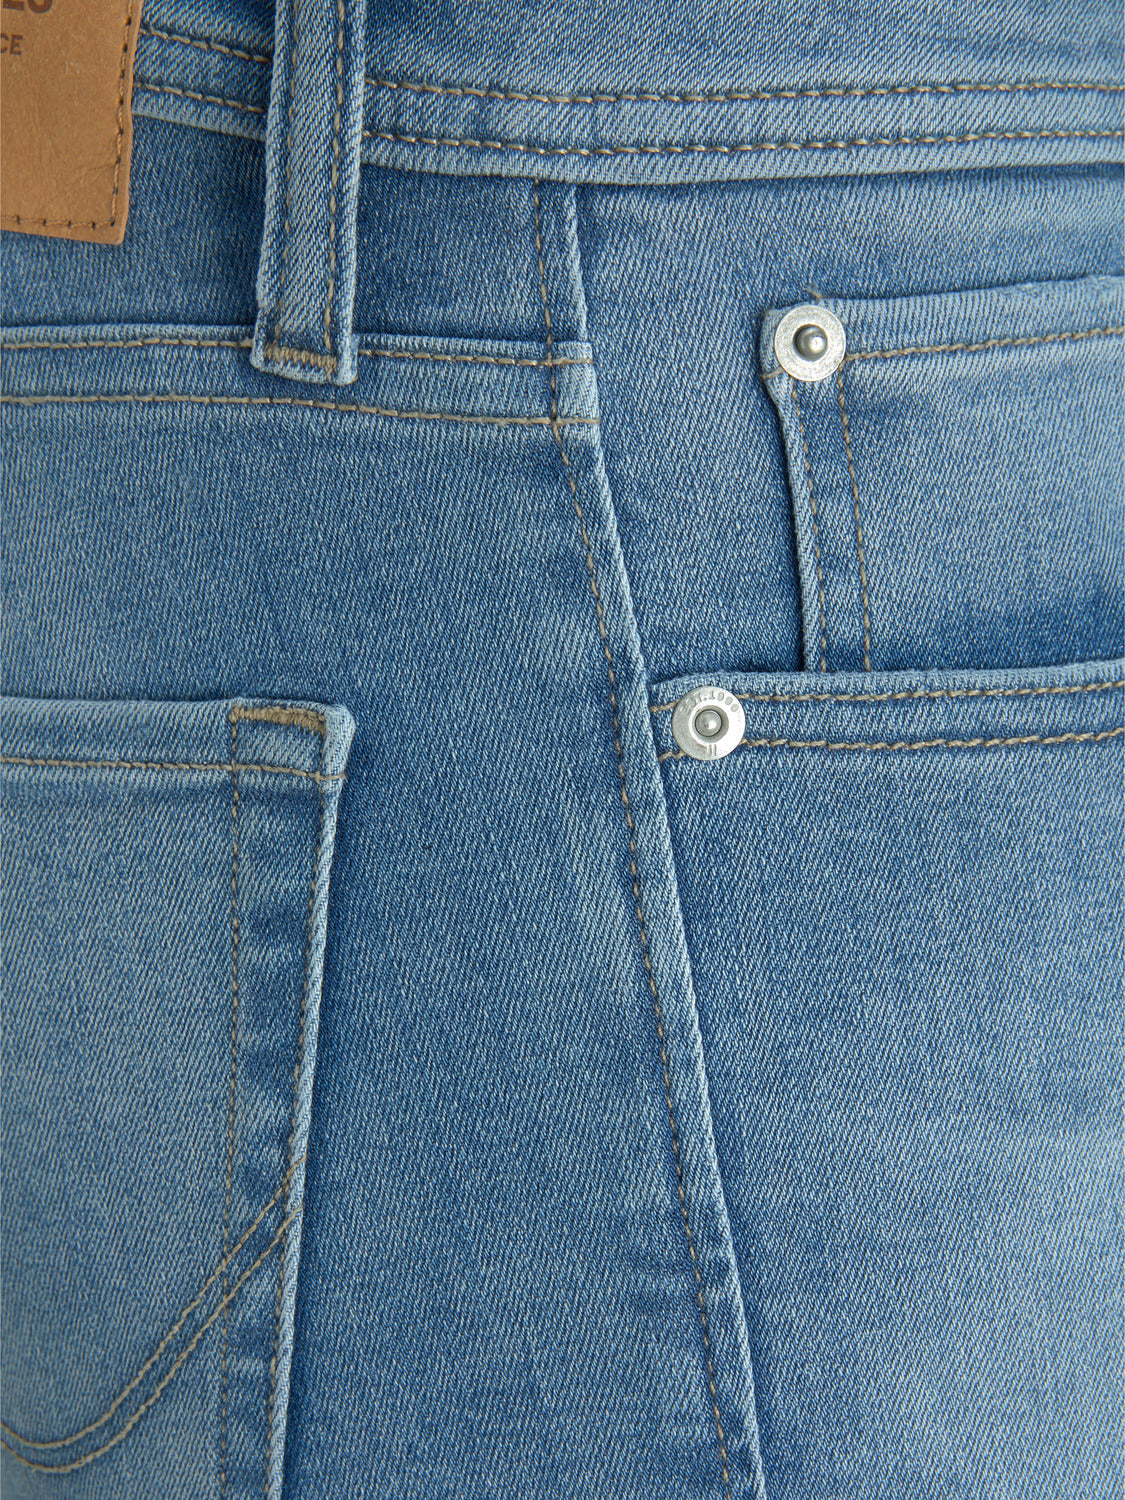 Pantalón corto Liam - Azul Denim